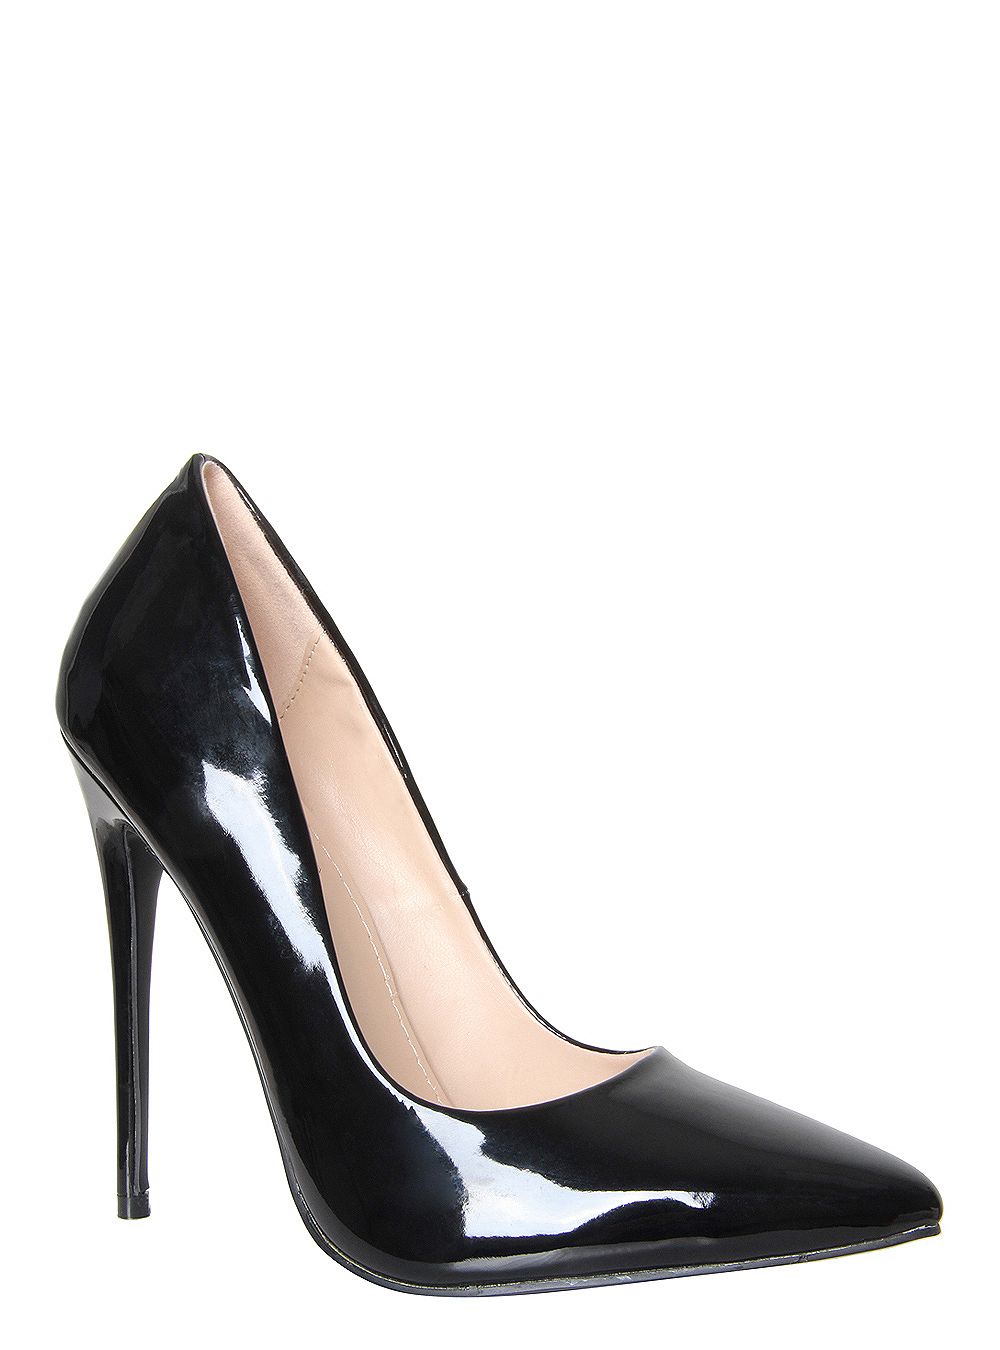 Simone Black Patent Stiletto Court Shoes